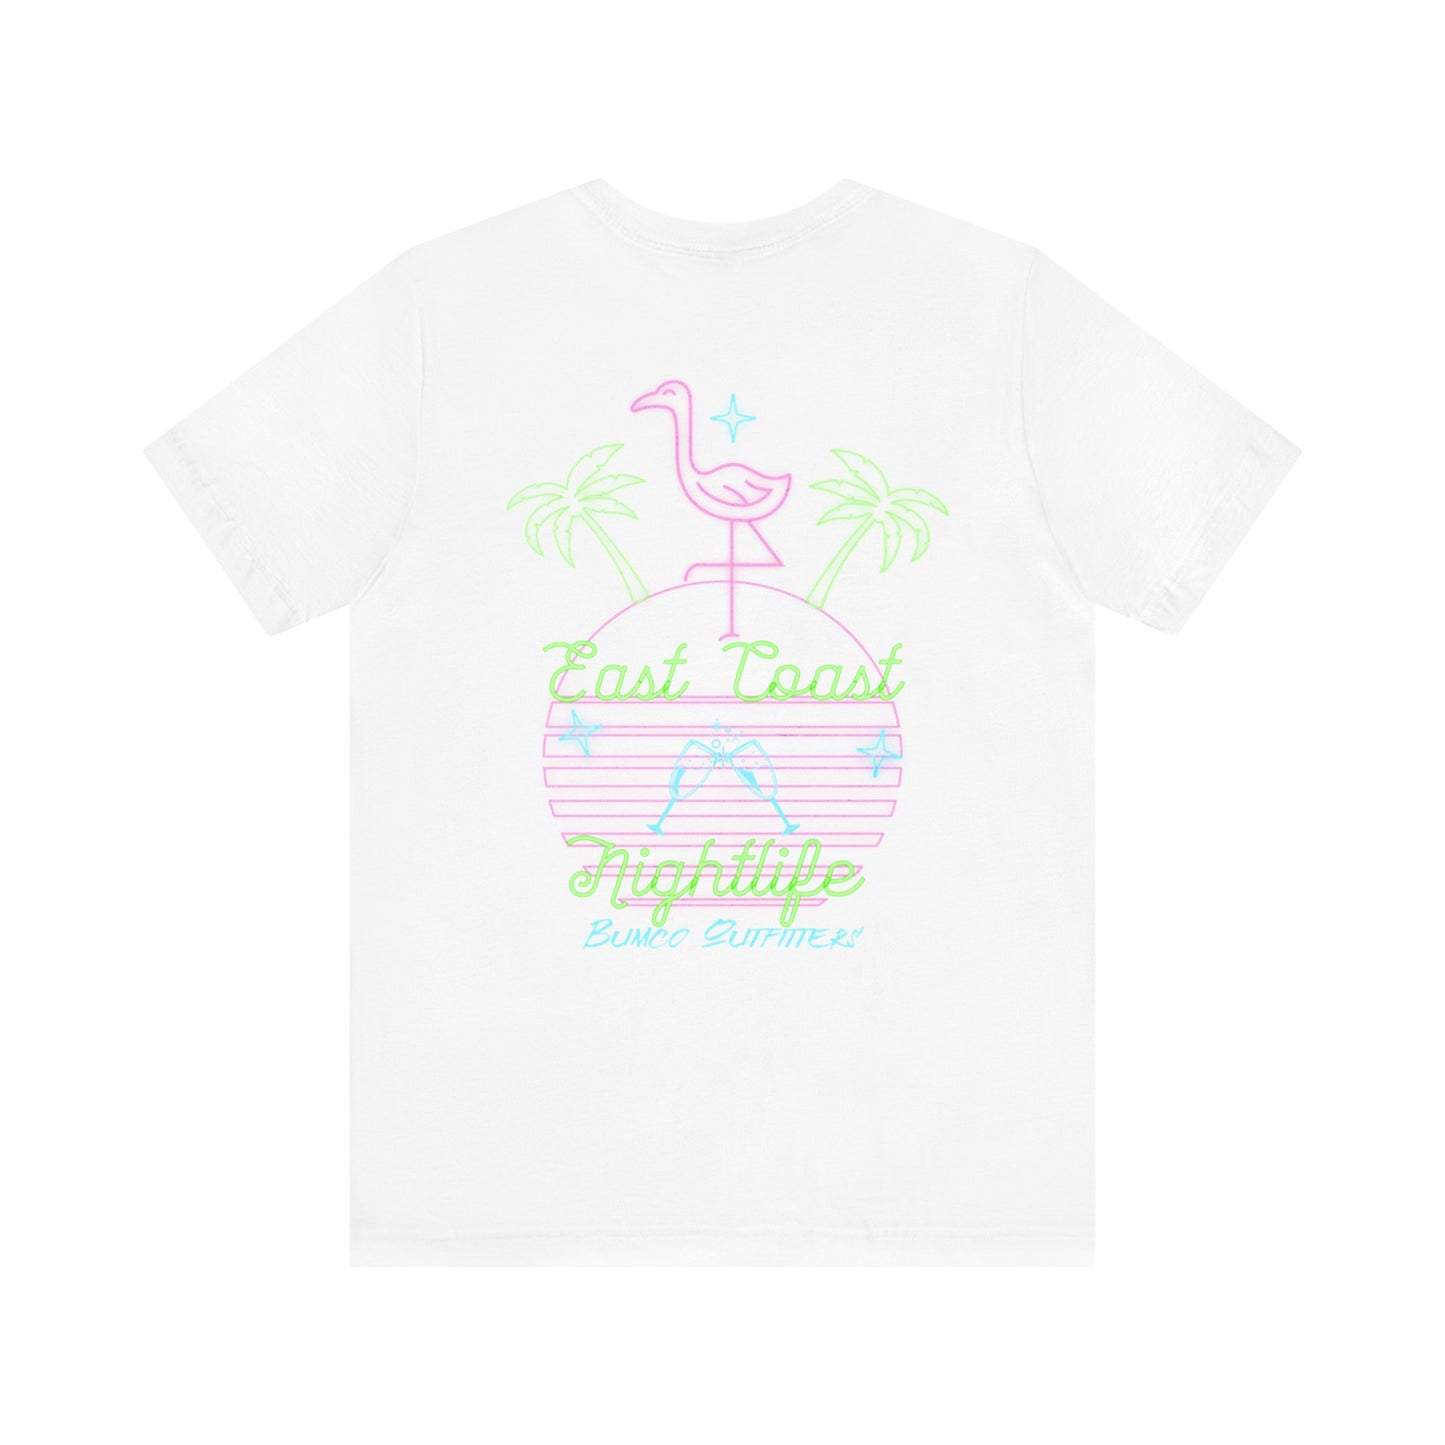 East Coast Nightlife - T-Shirt